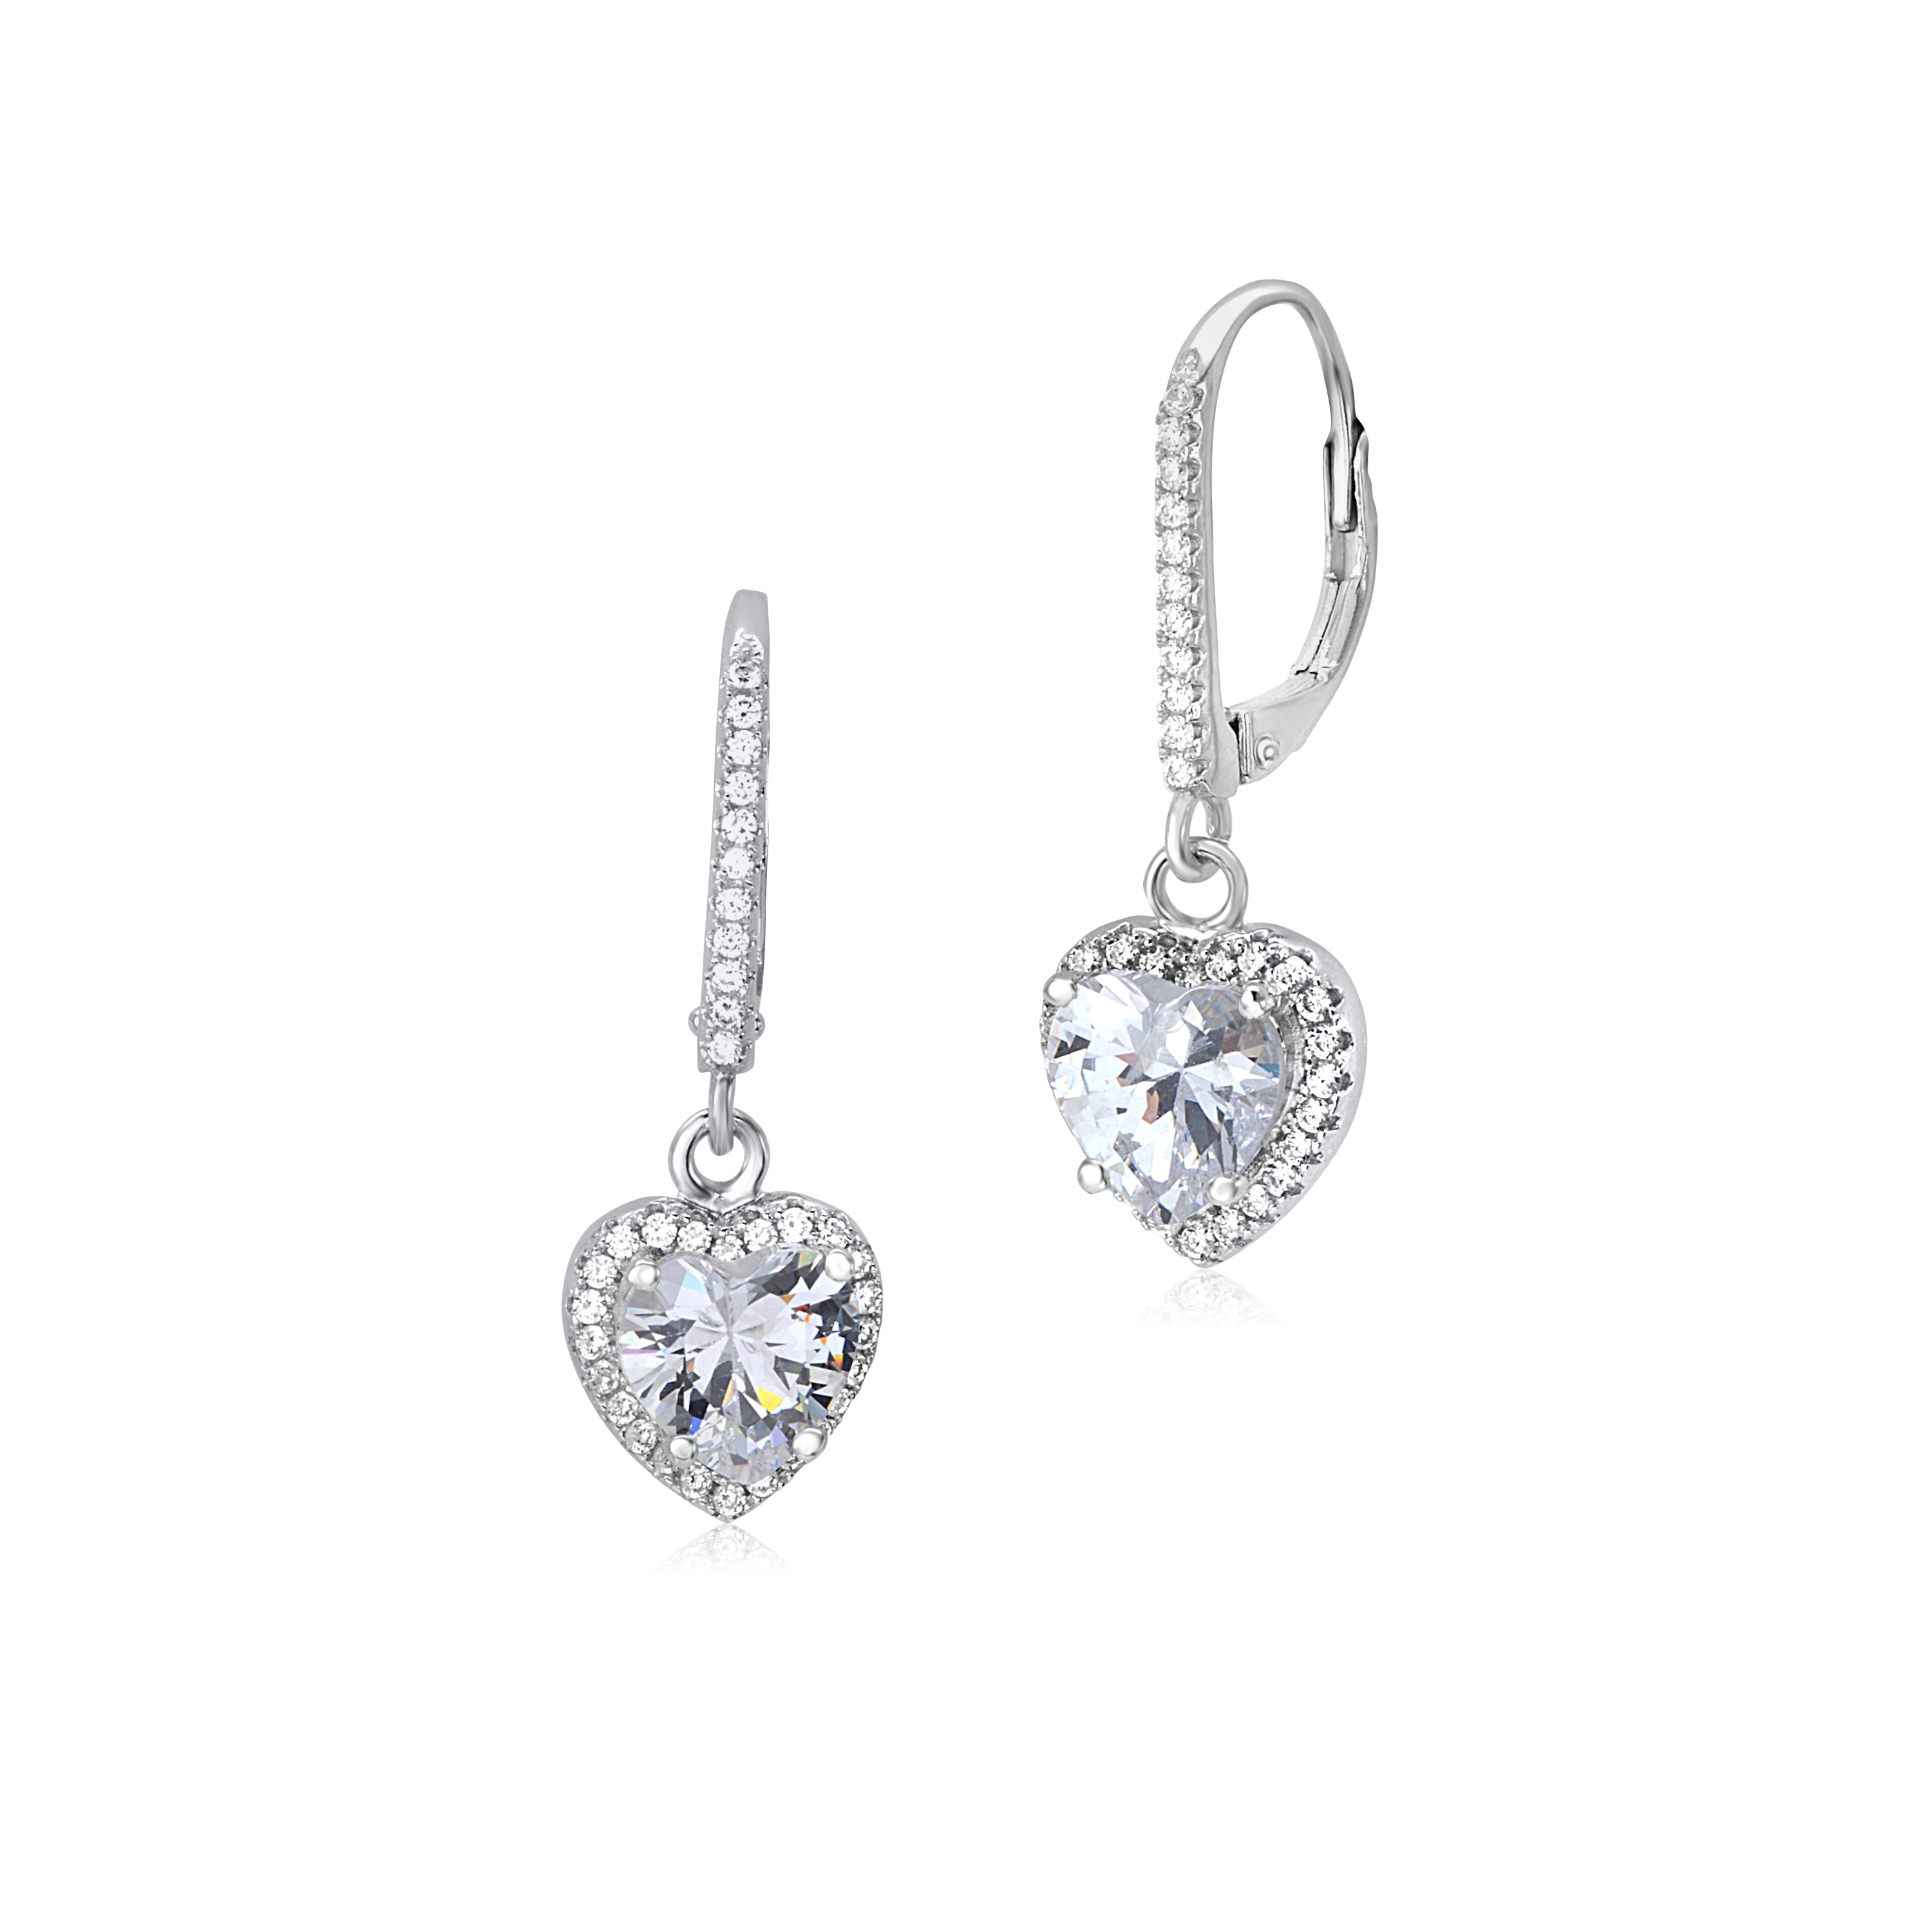 Sterling Silver 925 Simulated Diamond Heart Halo Leverback Earrings Dangle